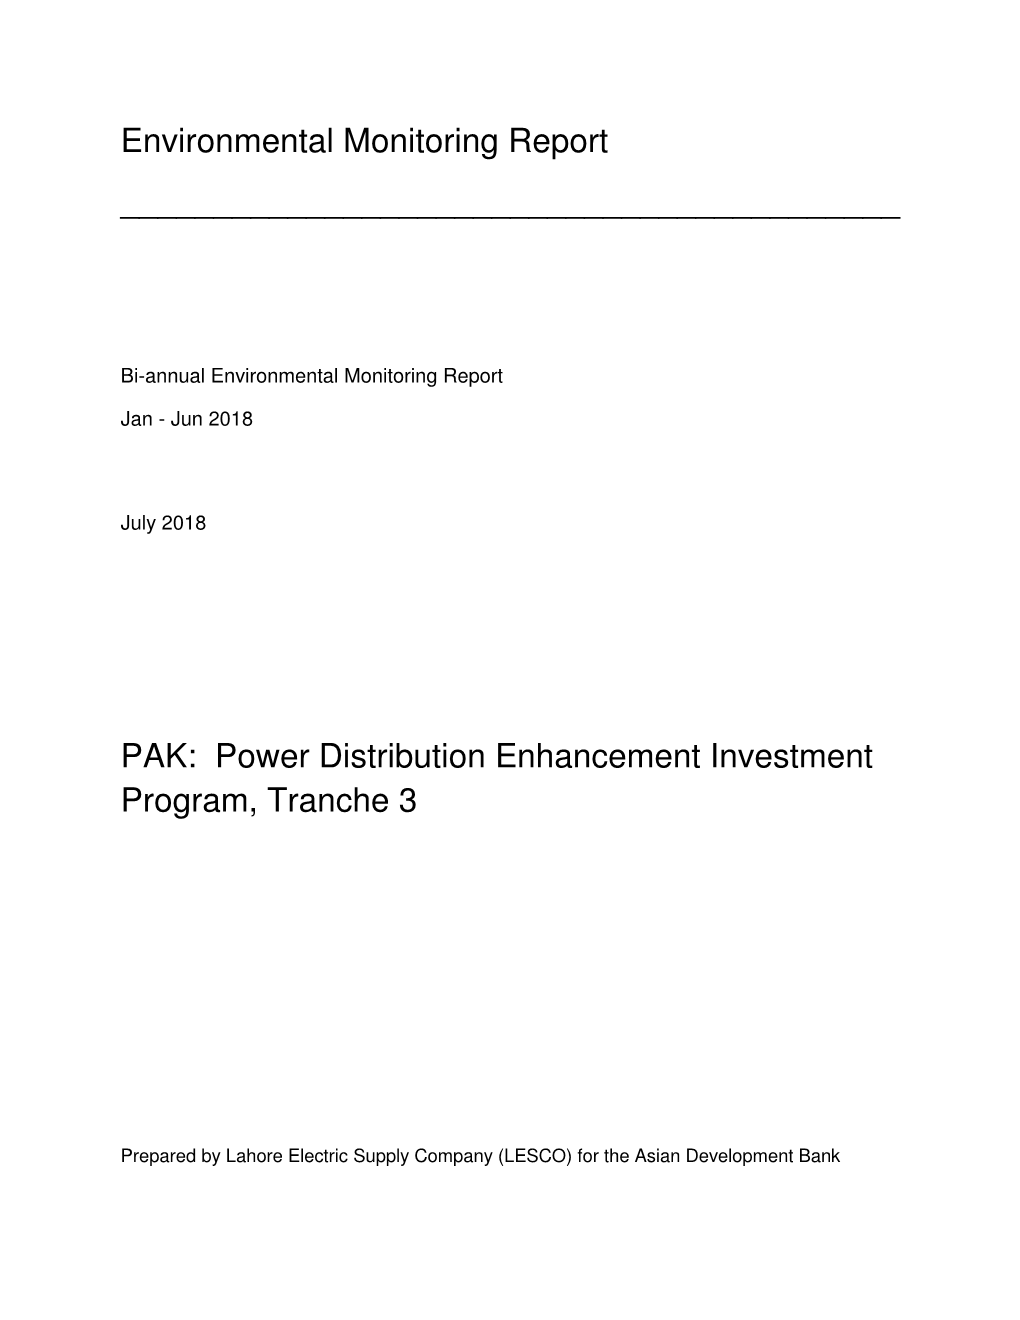 38456-034: Power Distribution Enhancement Investment Program